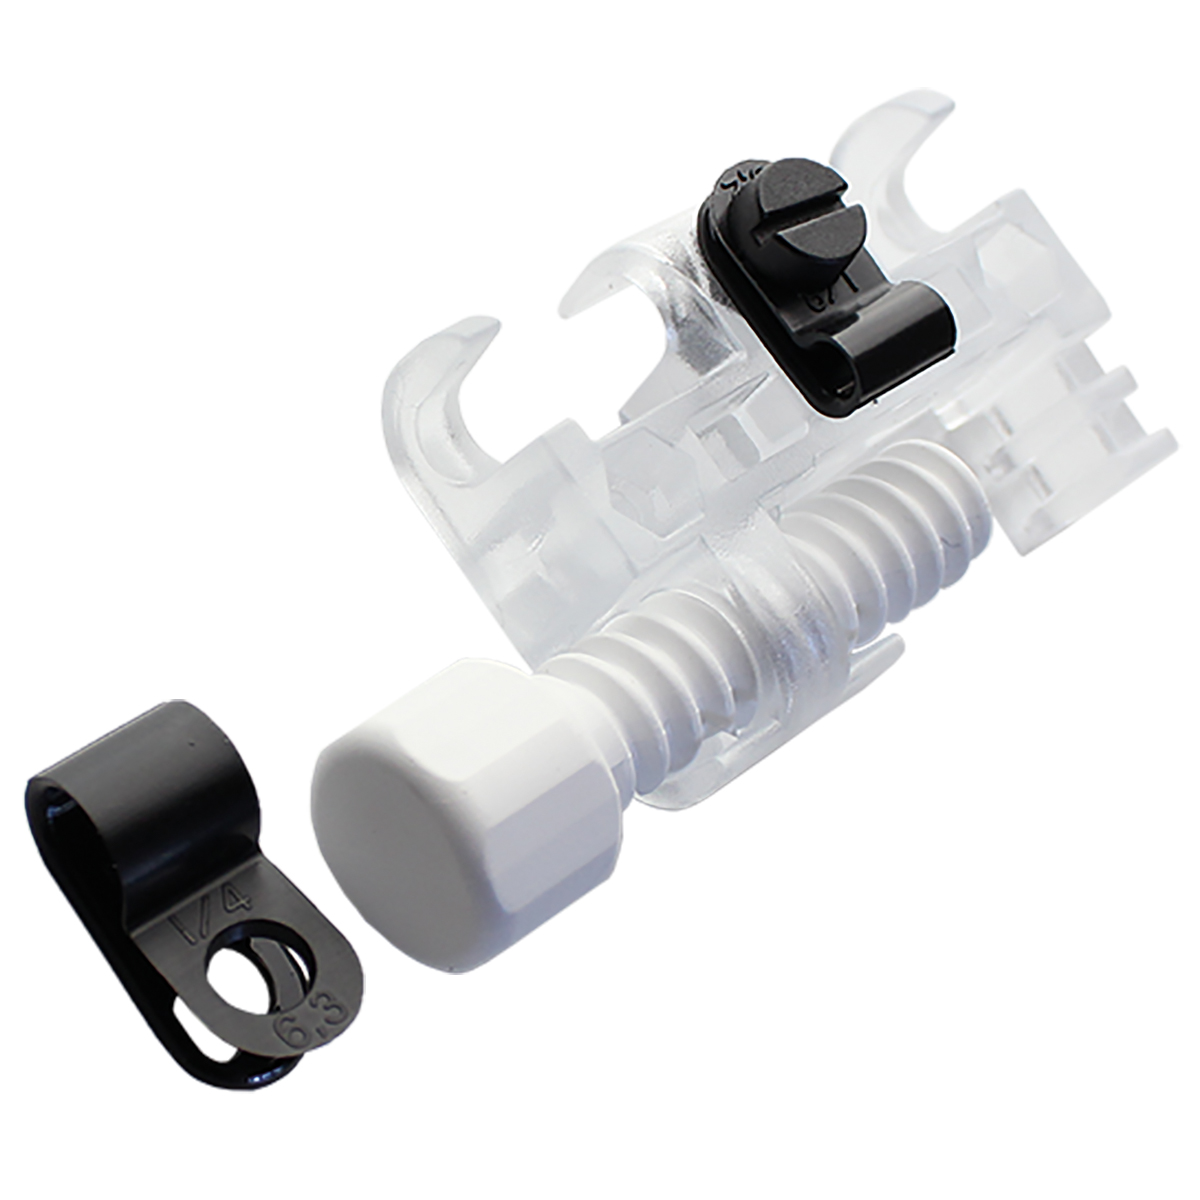 Tube holder / mounting clamp